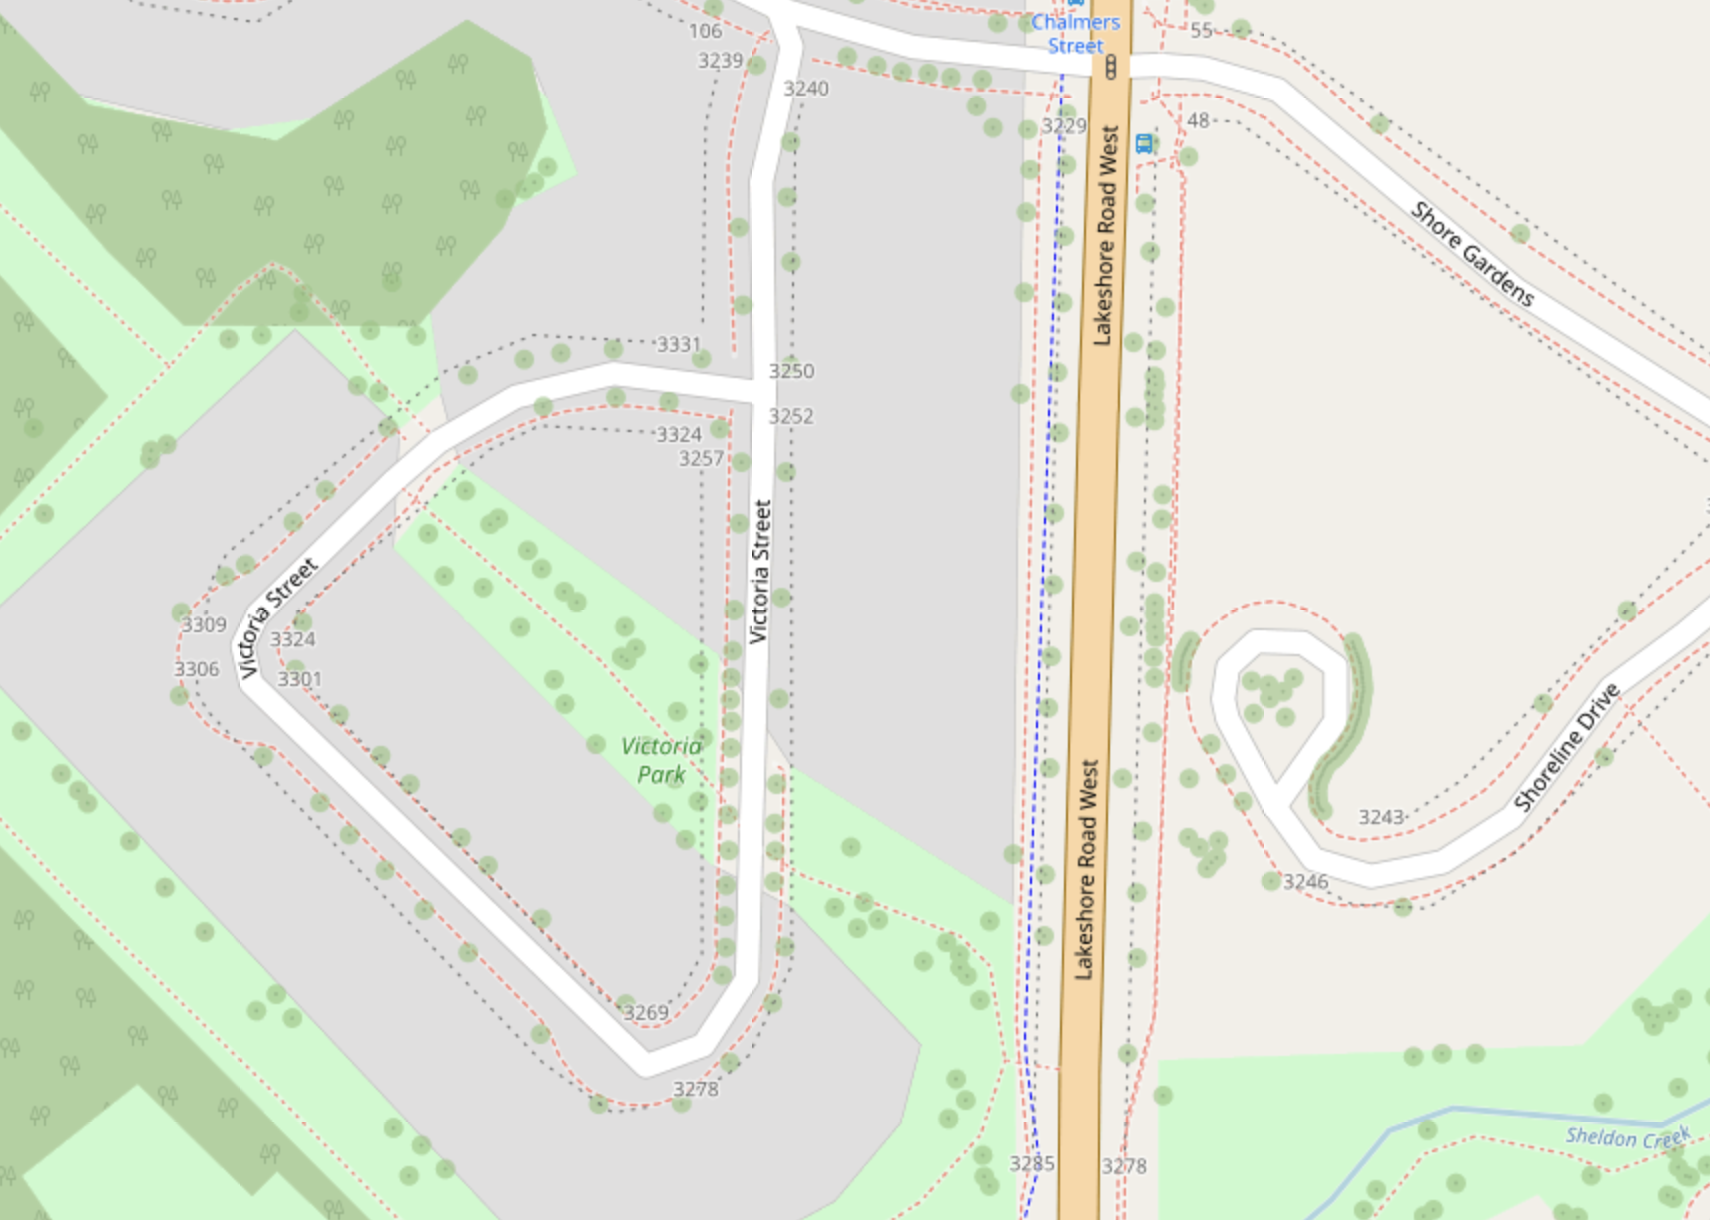 Victoria Park | Openstreetmap